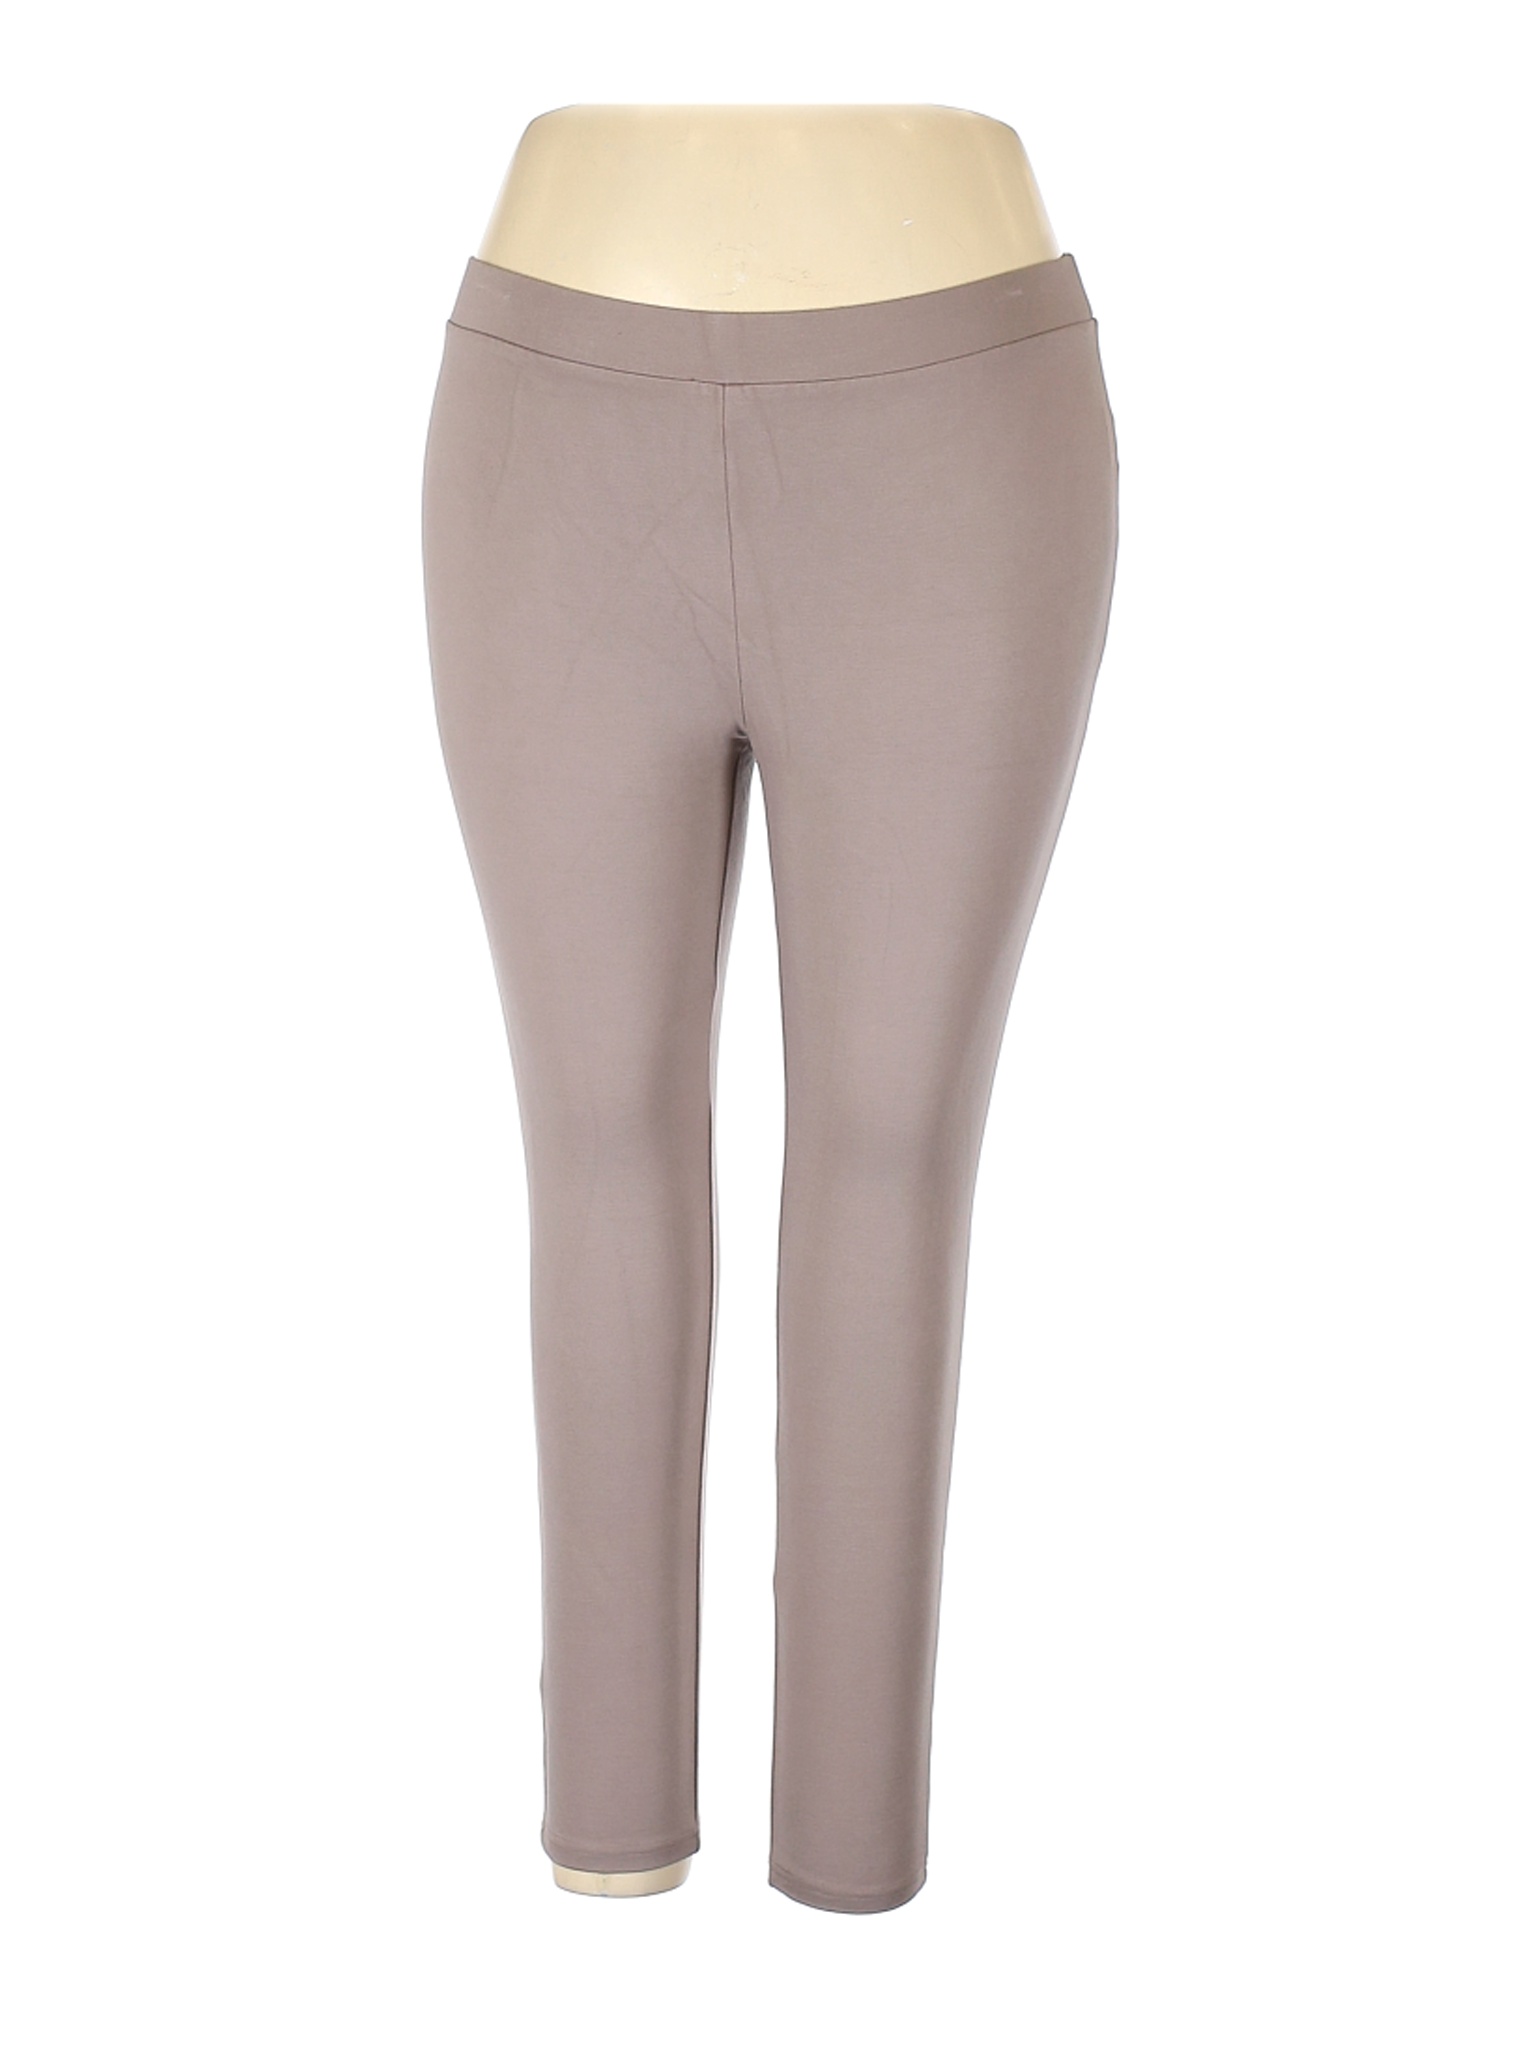 Philosophy by Republic Women Brown Dress Pants 2X Plus | eBay